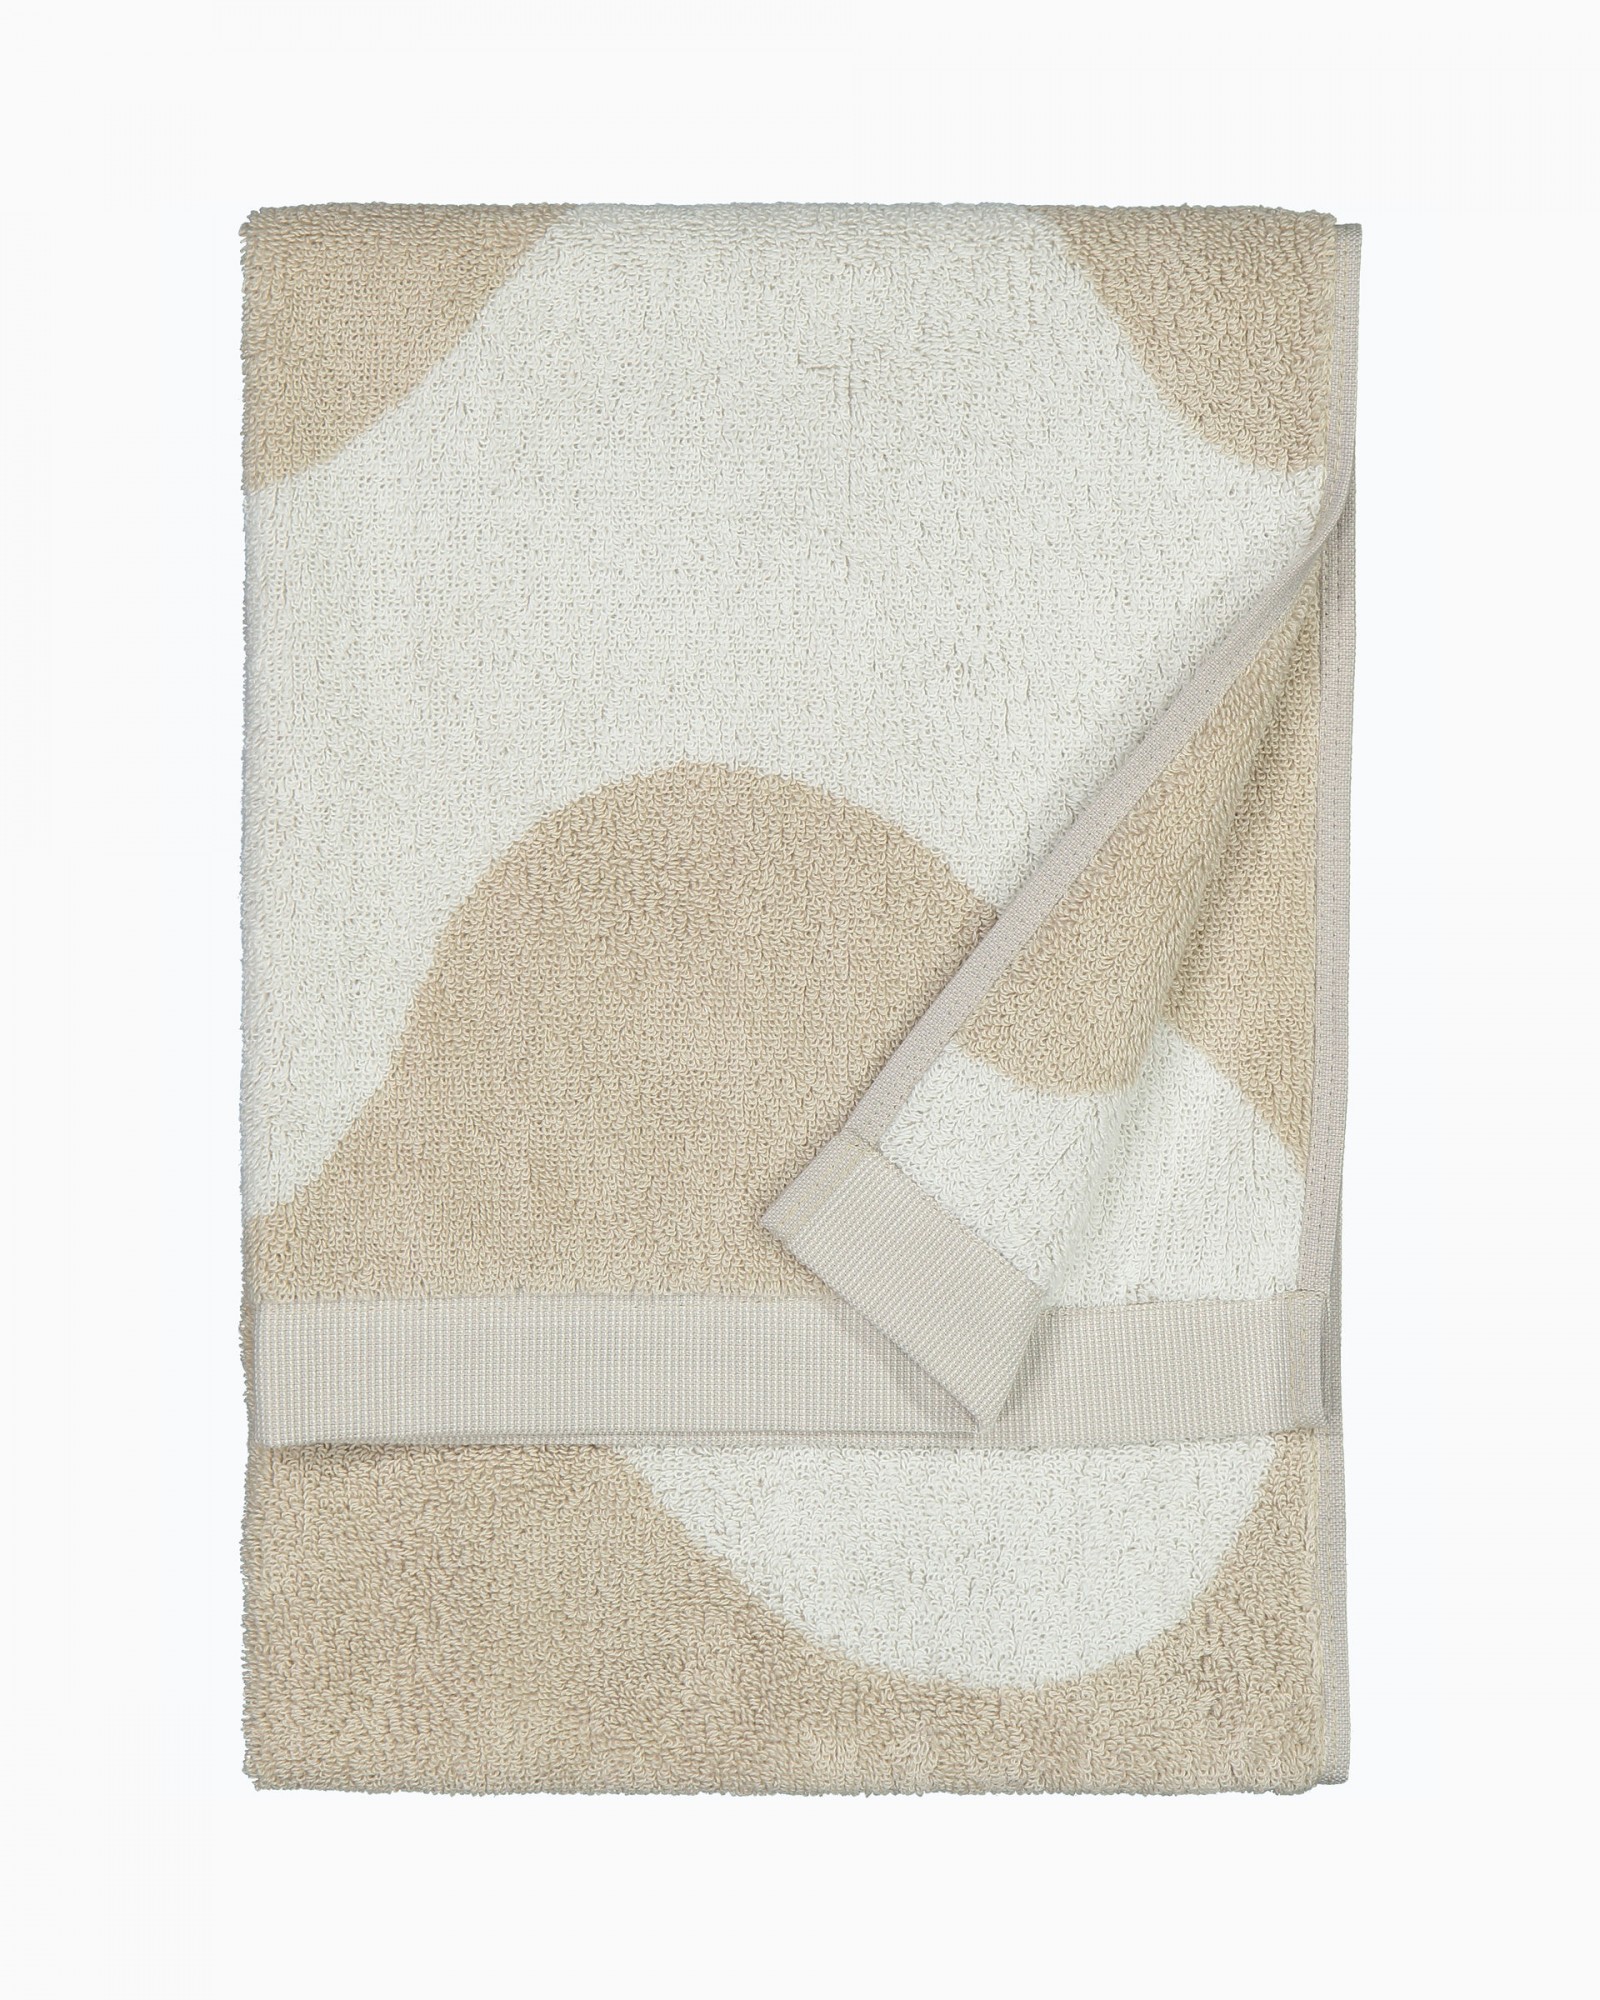 Lokki hand towel 50x70 cm beige/white